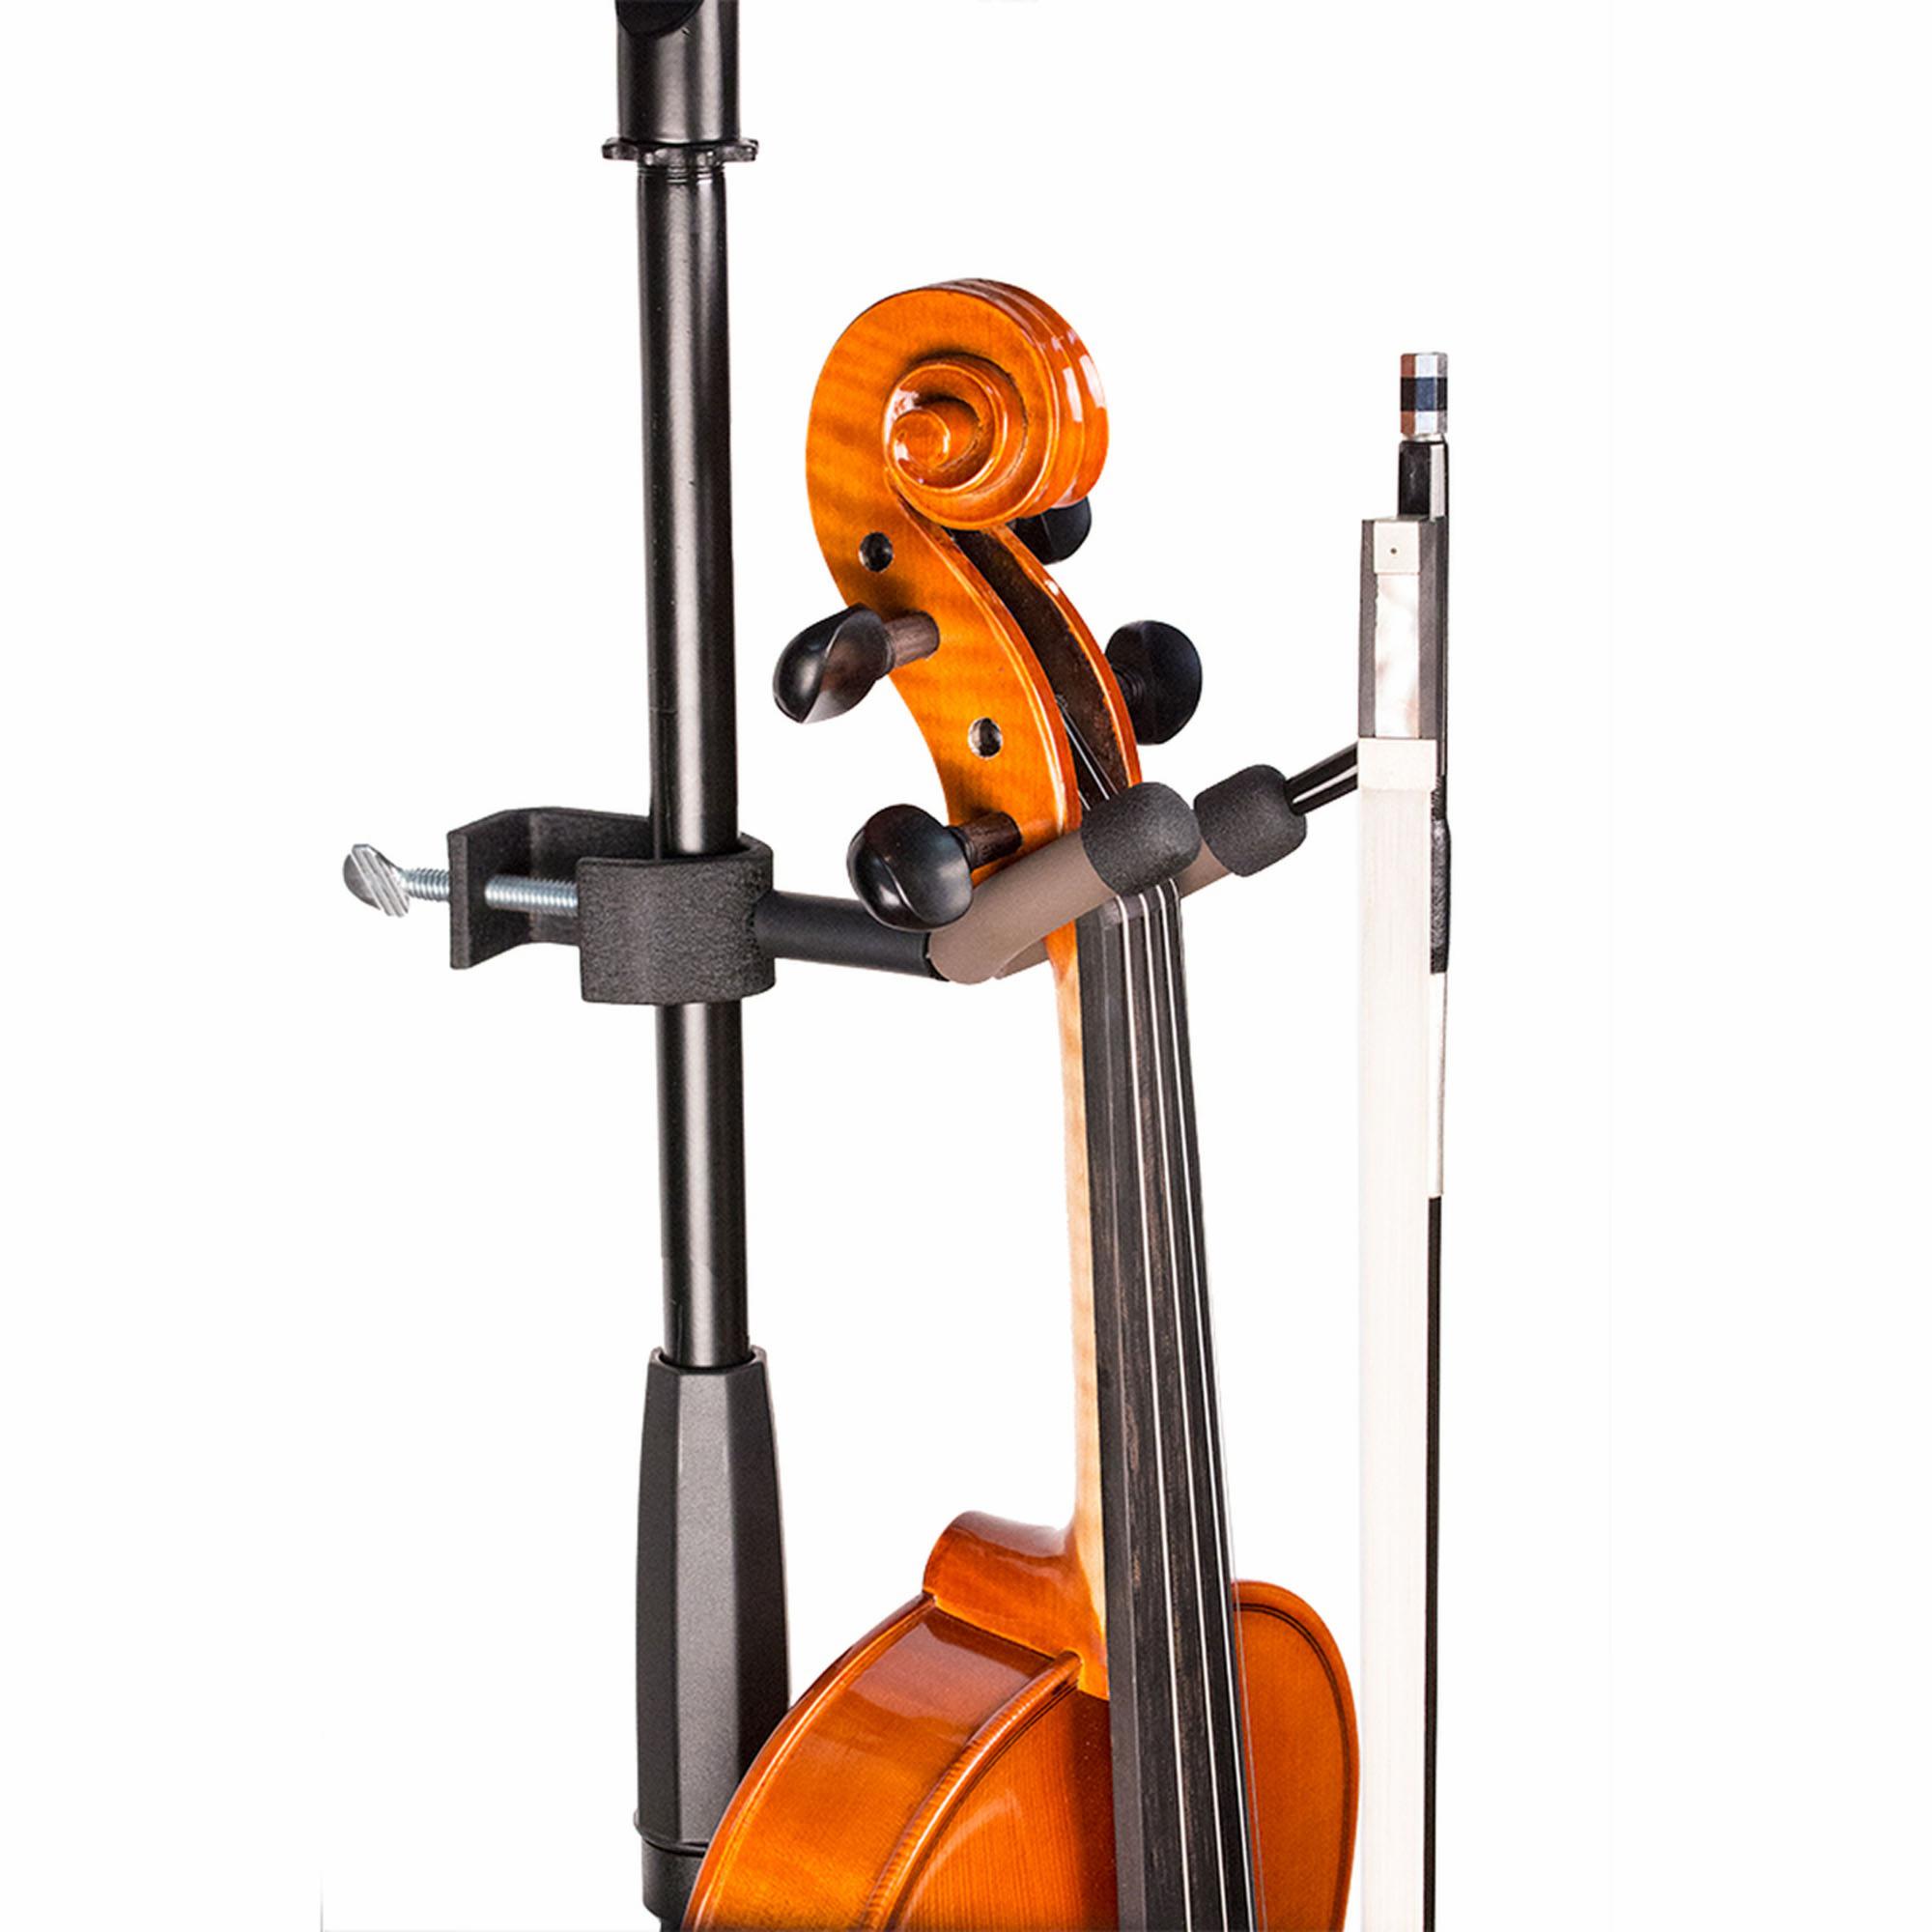 Violin/Viola, Clamp, Stand Pole Mount